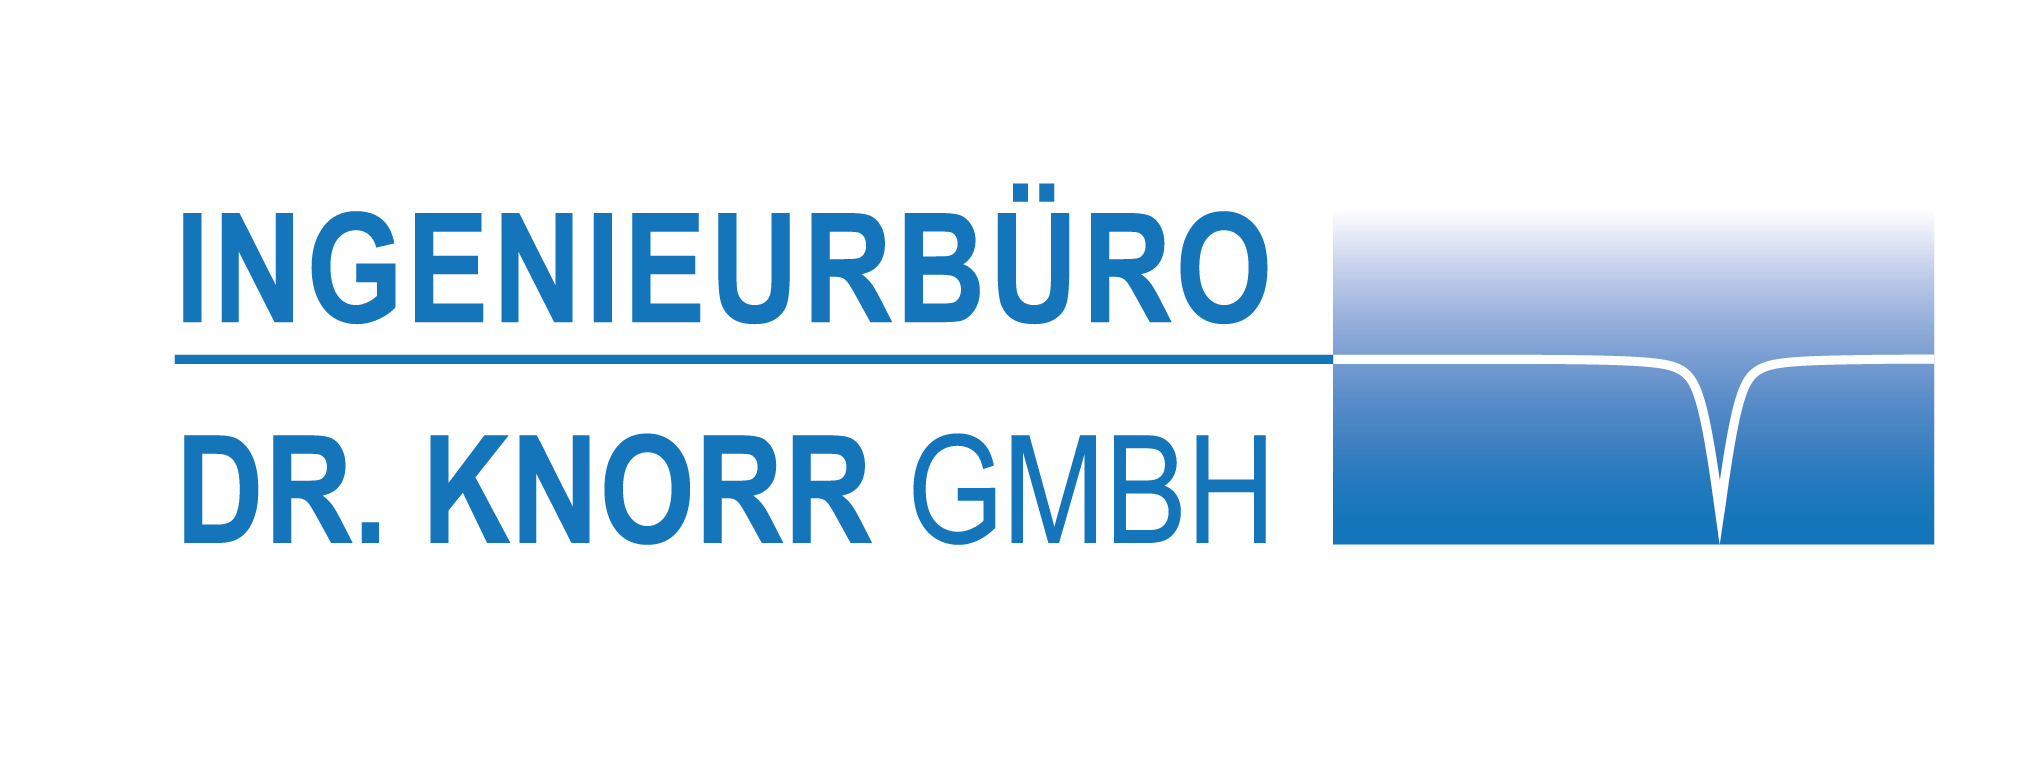 Ingenieurbüro Dr. Knorr GmbH - Karriere